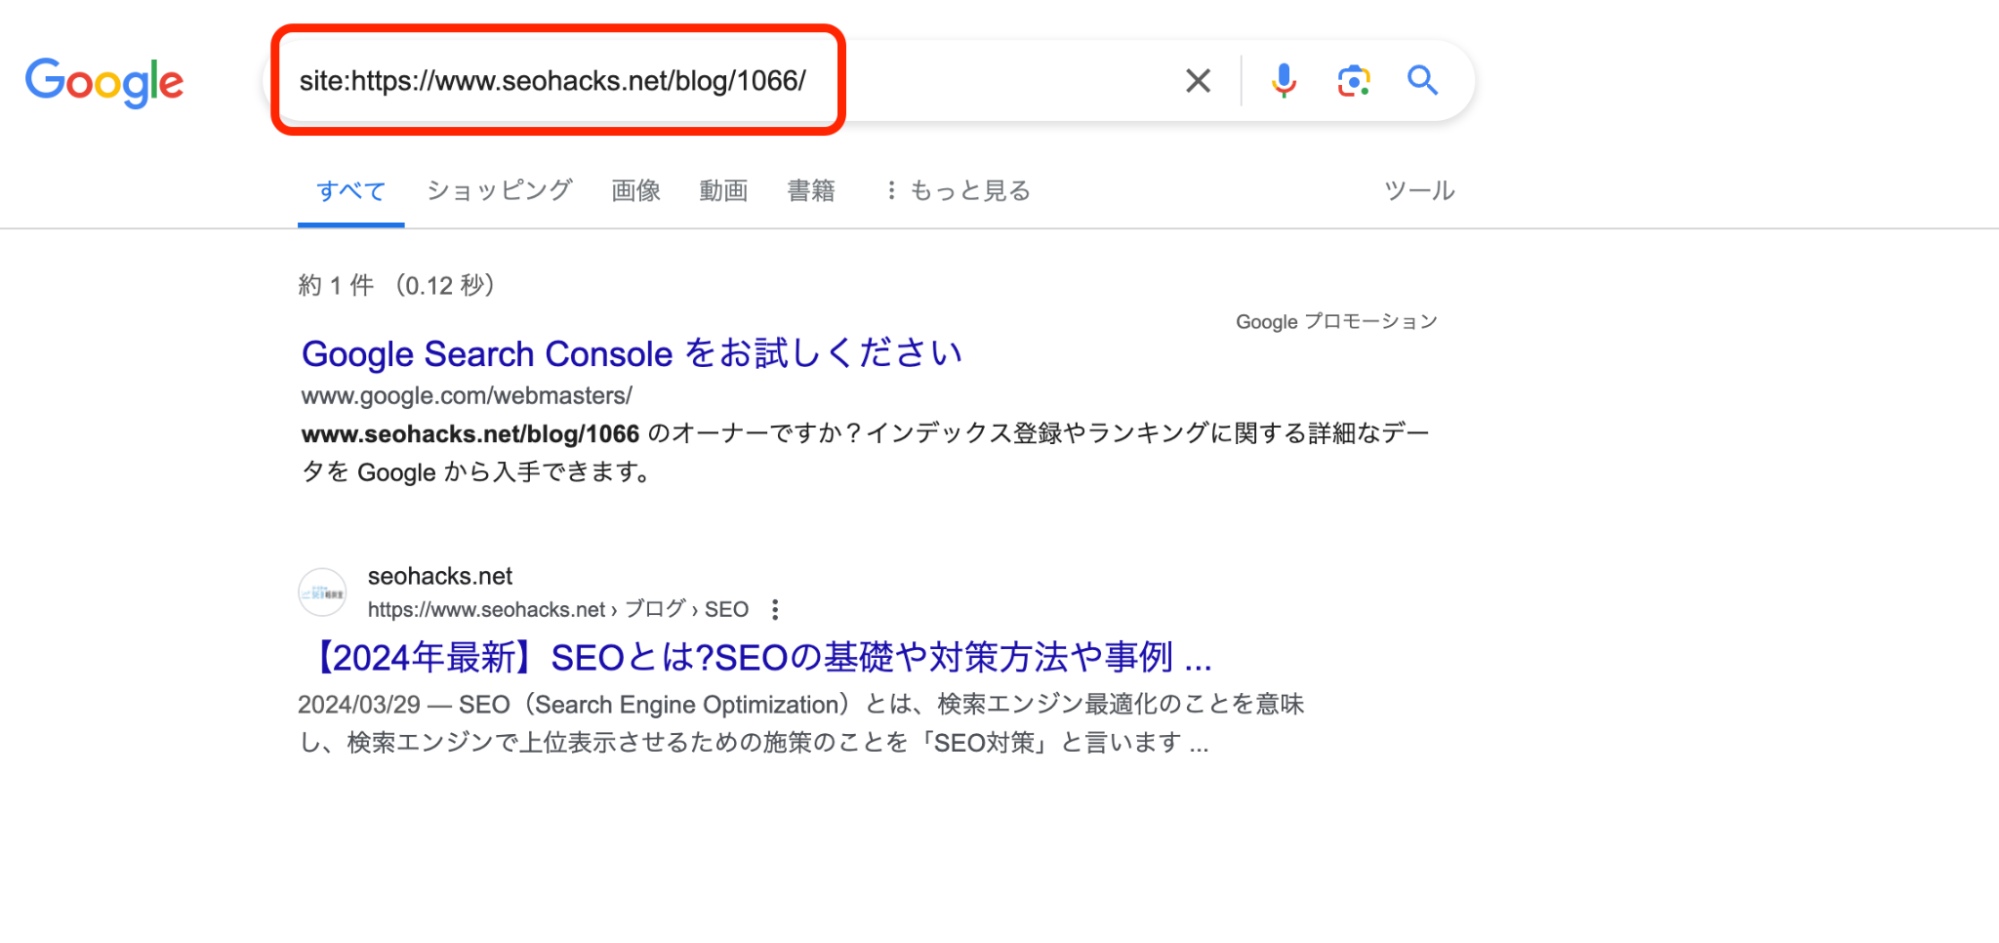 「site:」コマンドを使用した際のGoogle検索結果